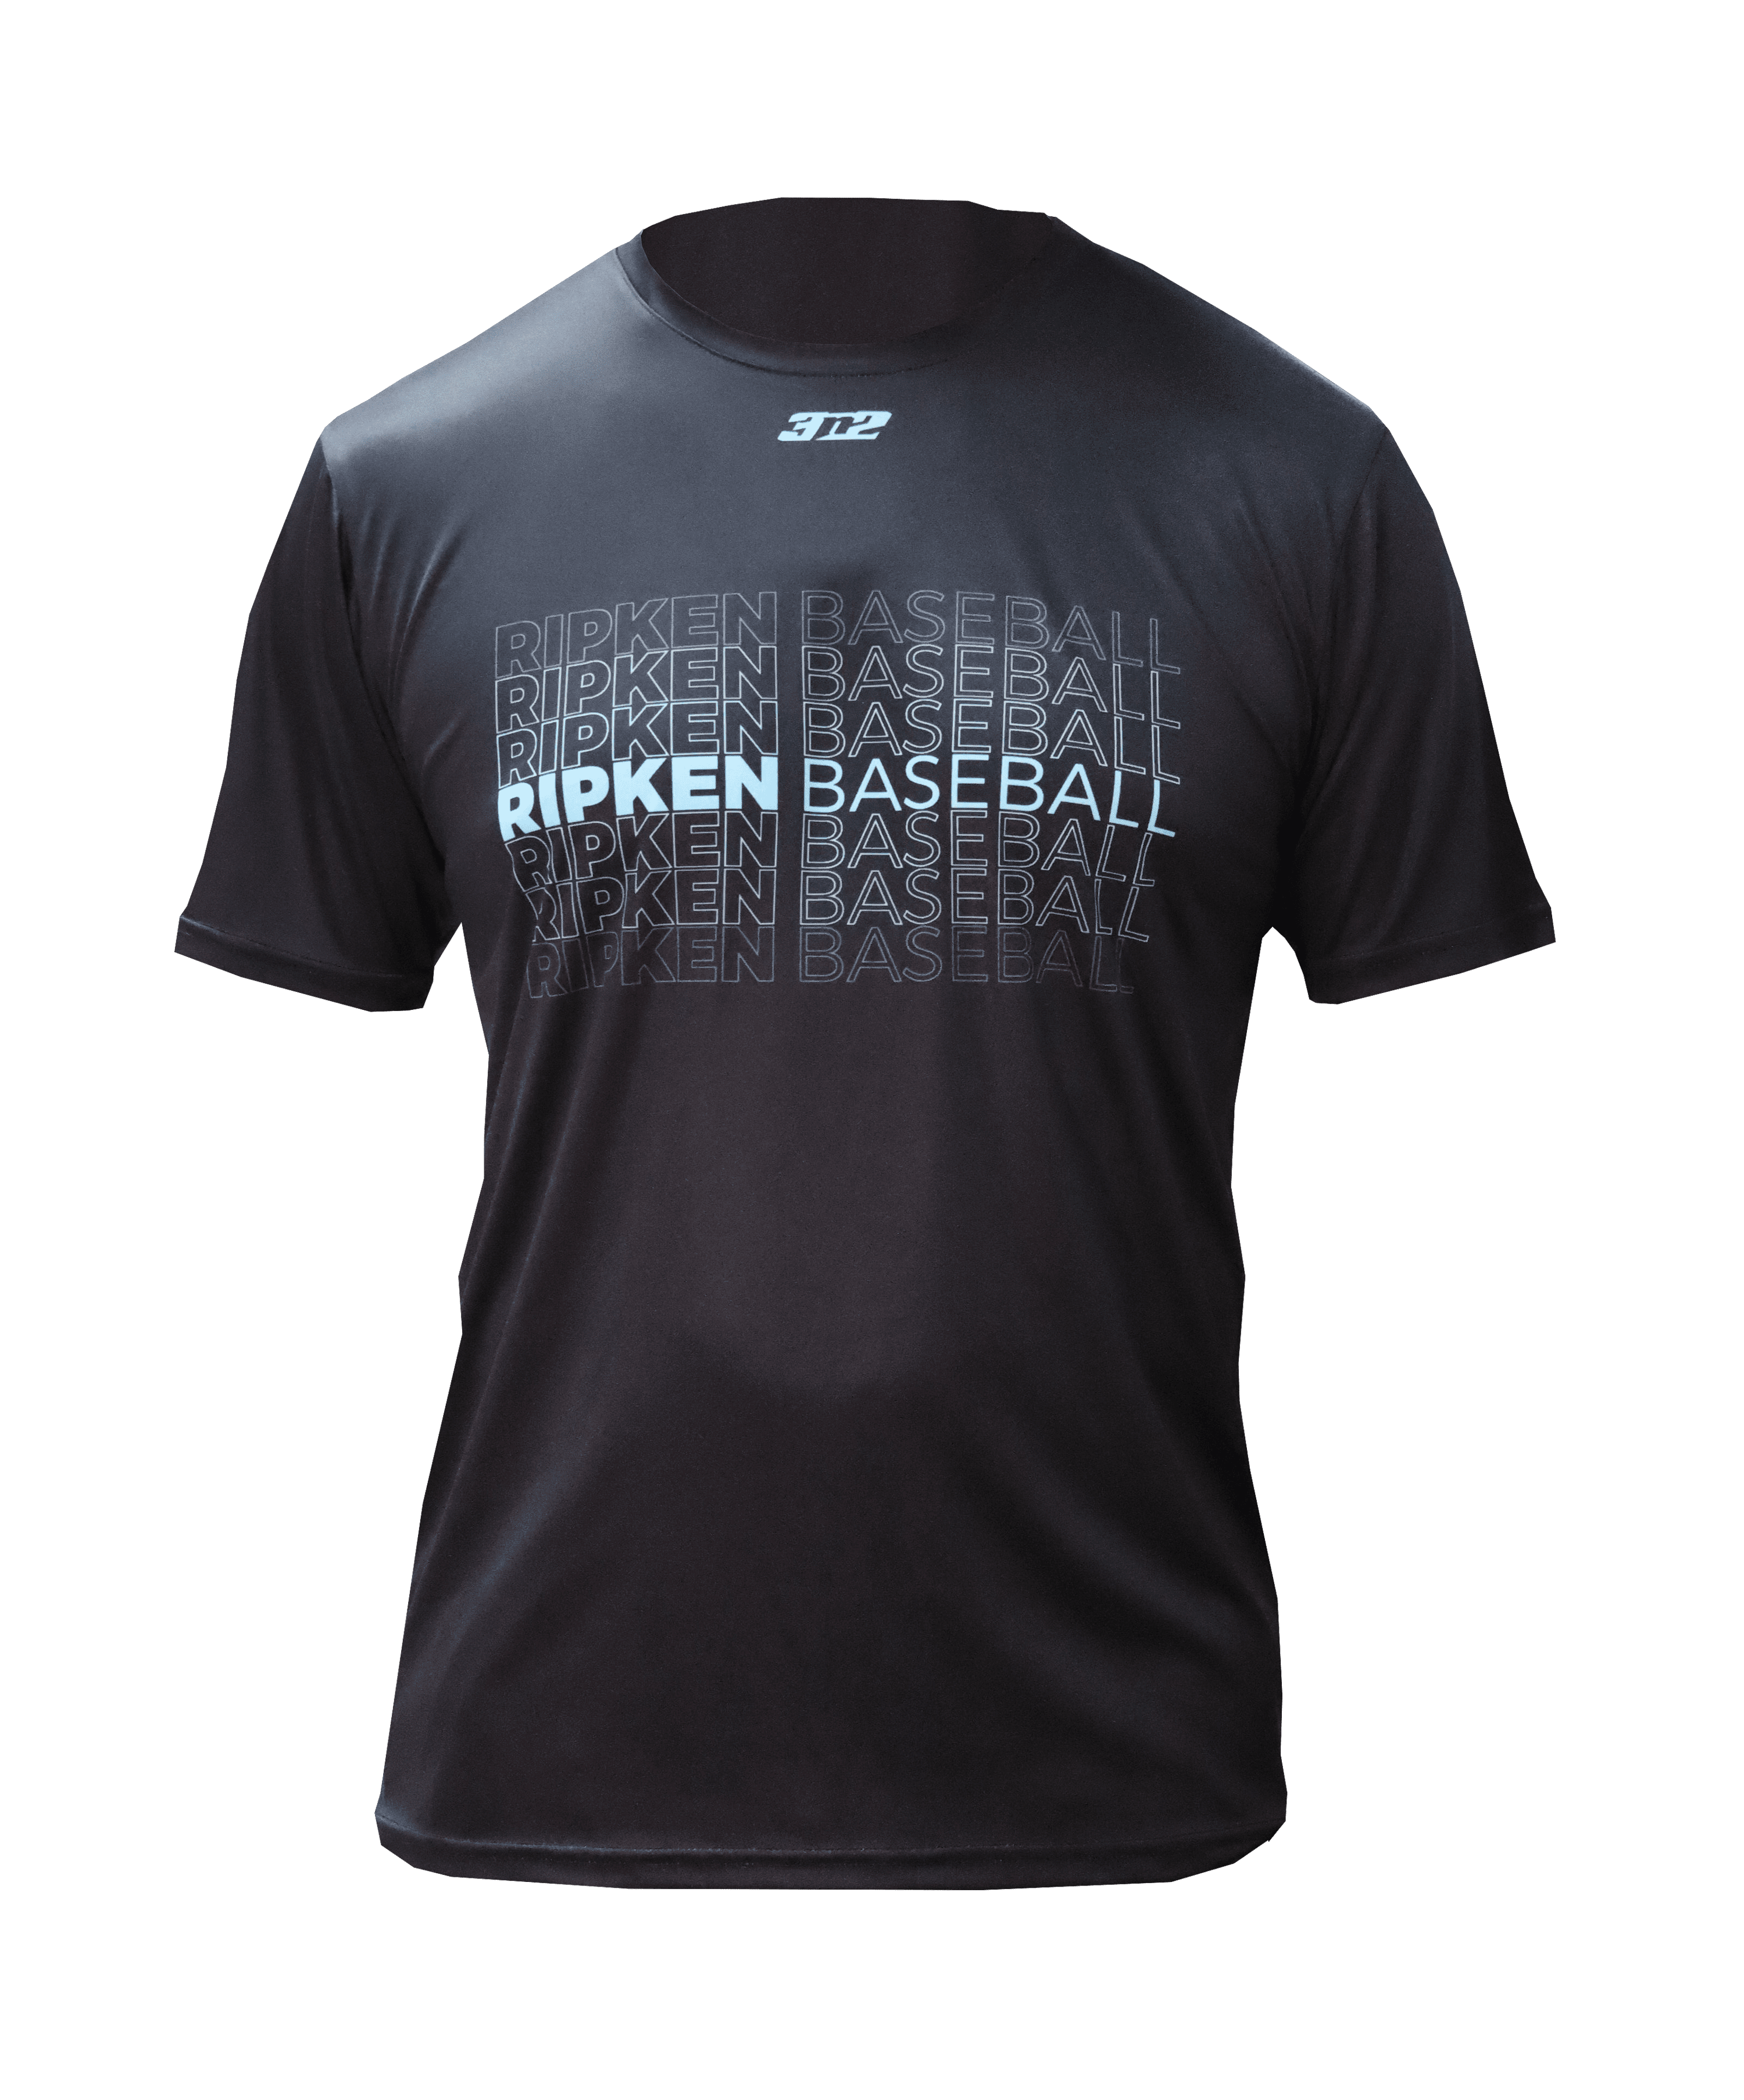 3 Ripken Baseball UA Shirts